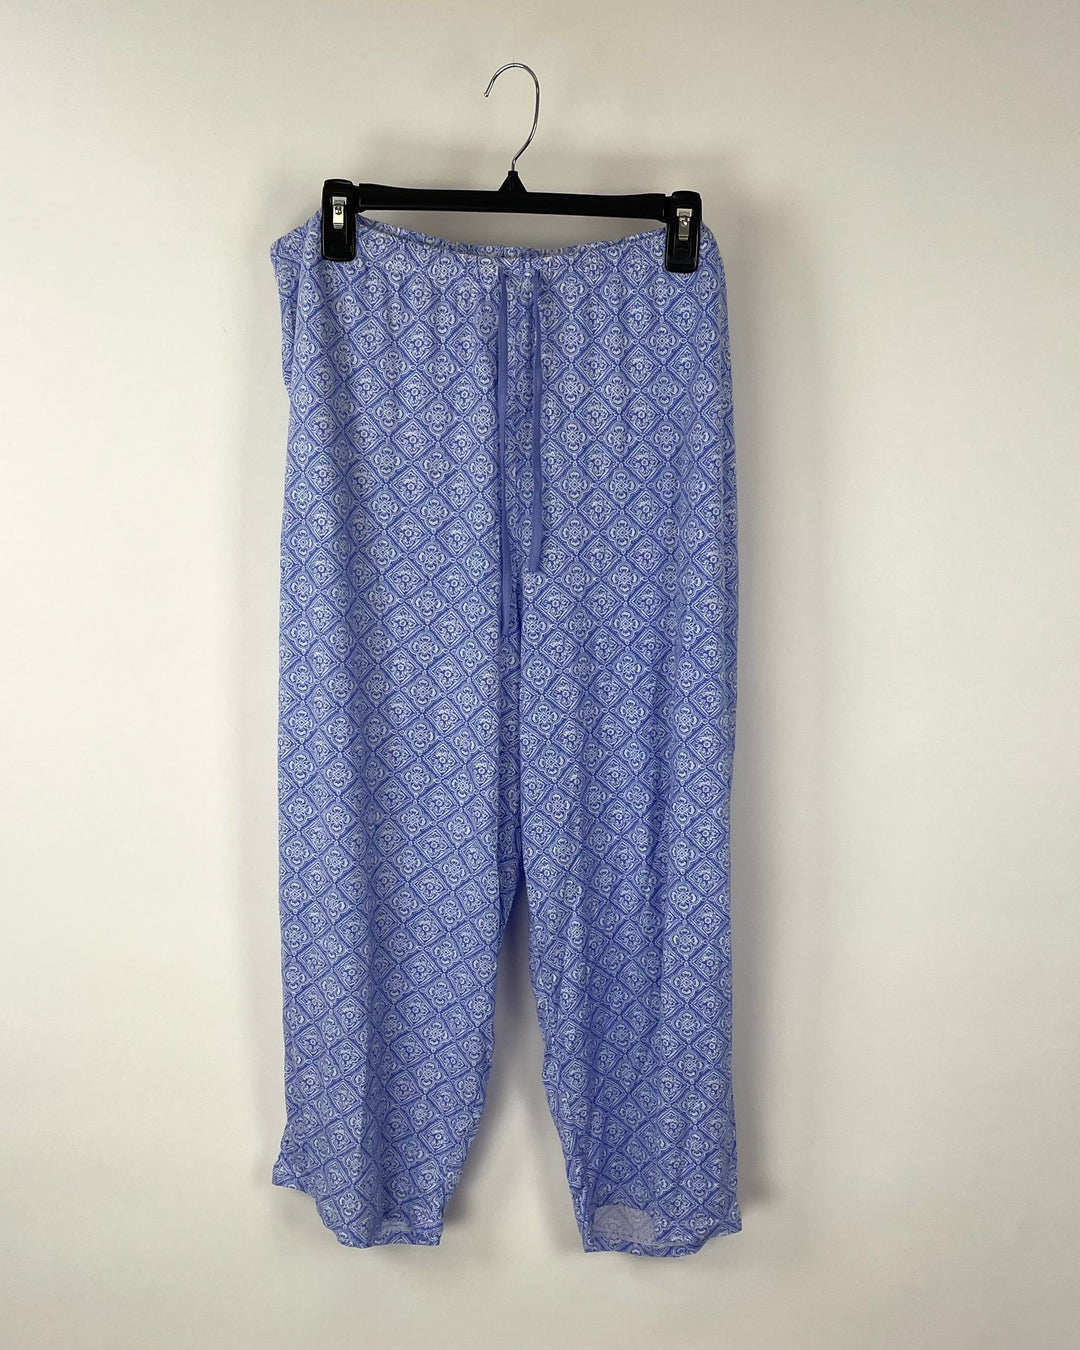 Blue And White Printed Pajama Pants - 1X